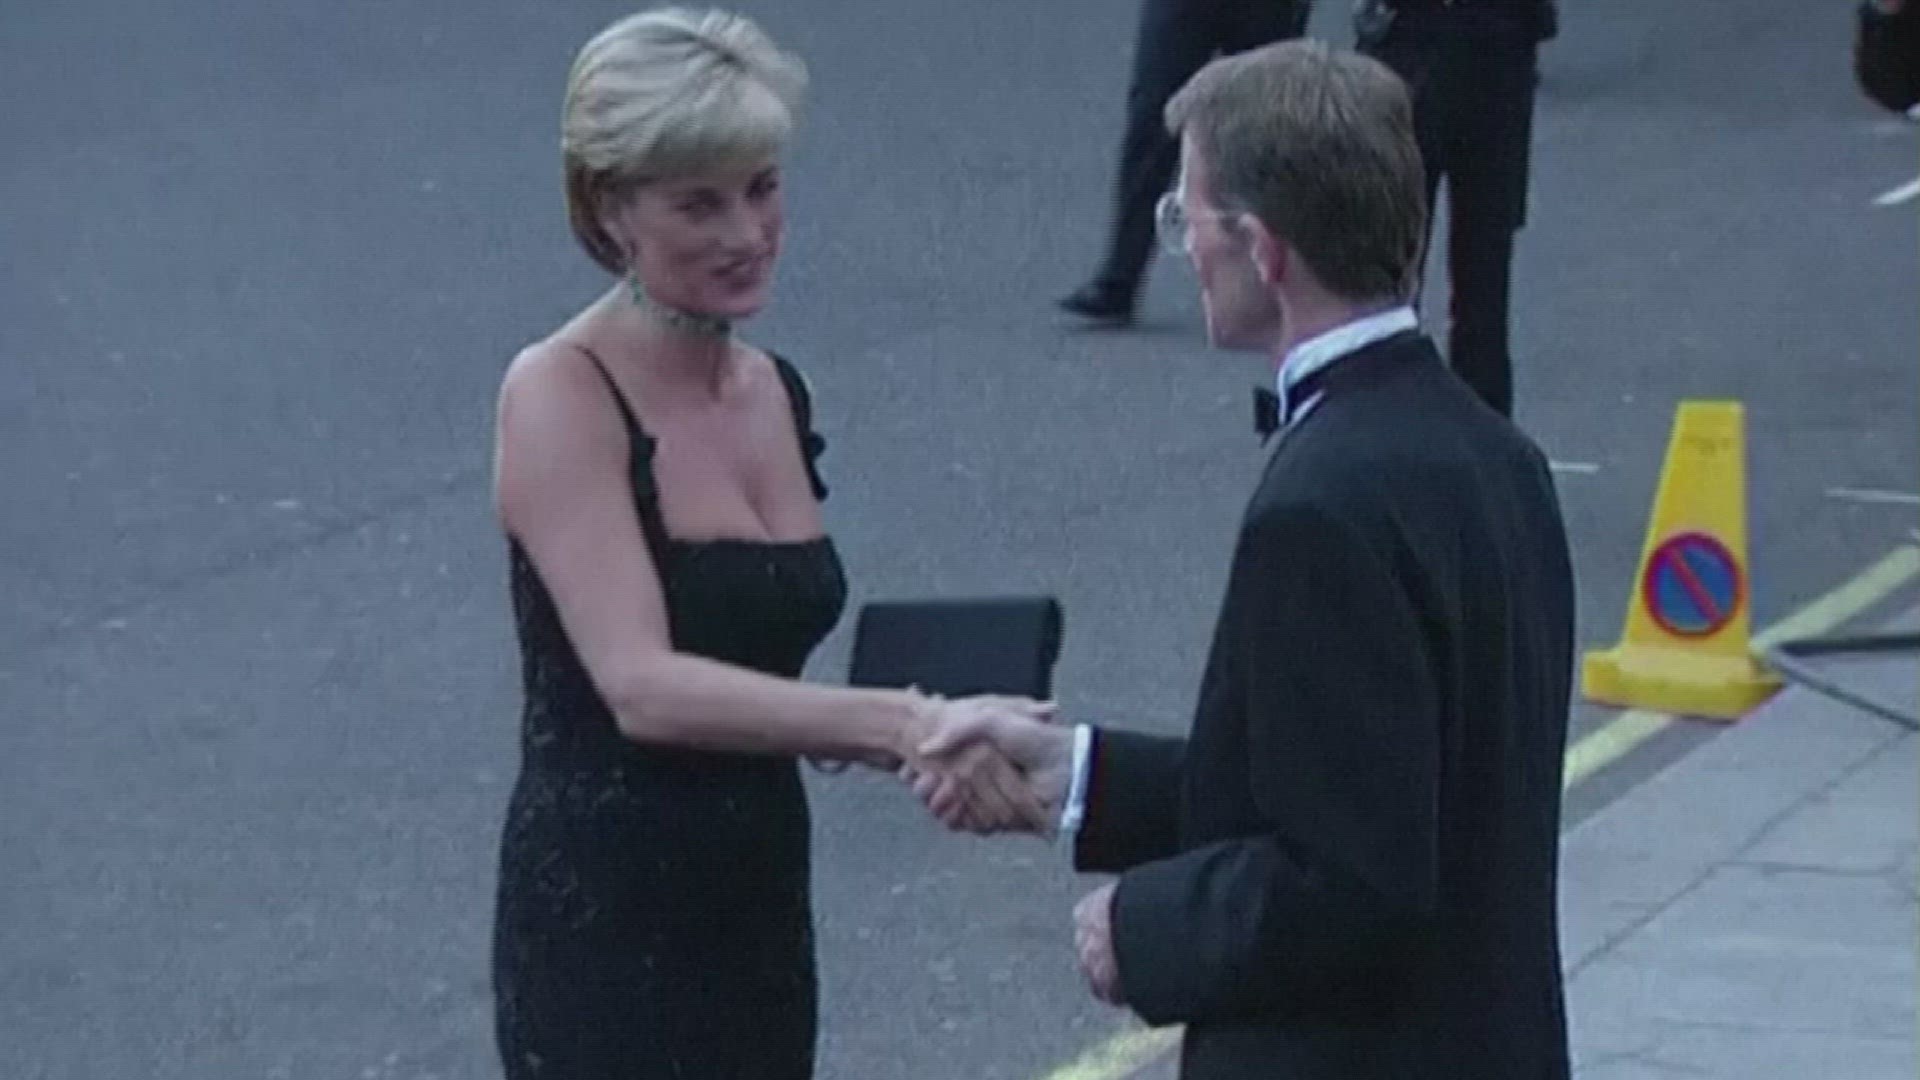 The BBC faces questions after Princess Diana report. Veuer's Elizabeth Keatinge has more.